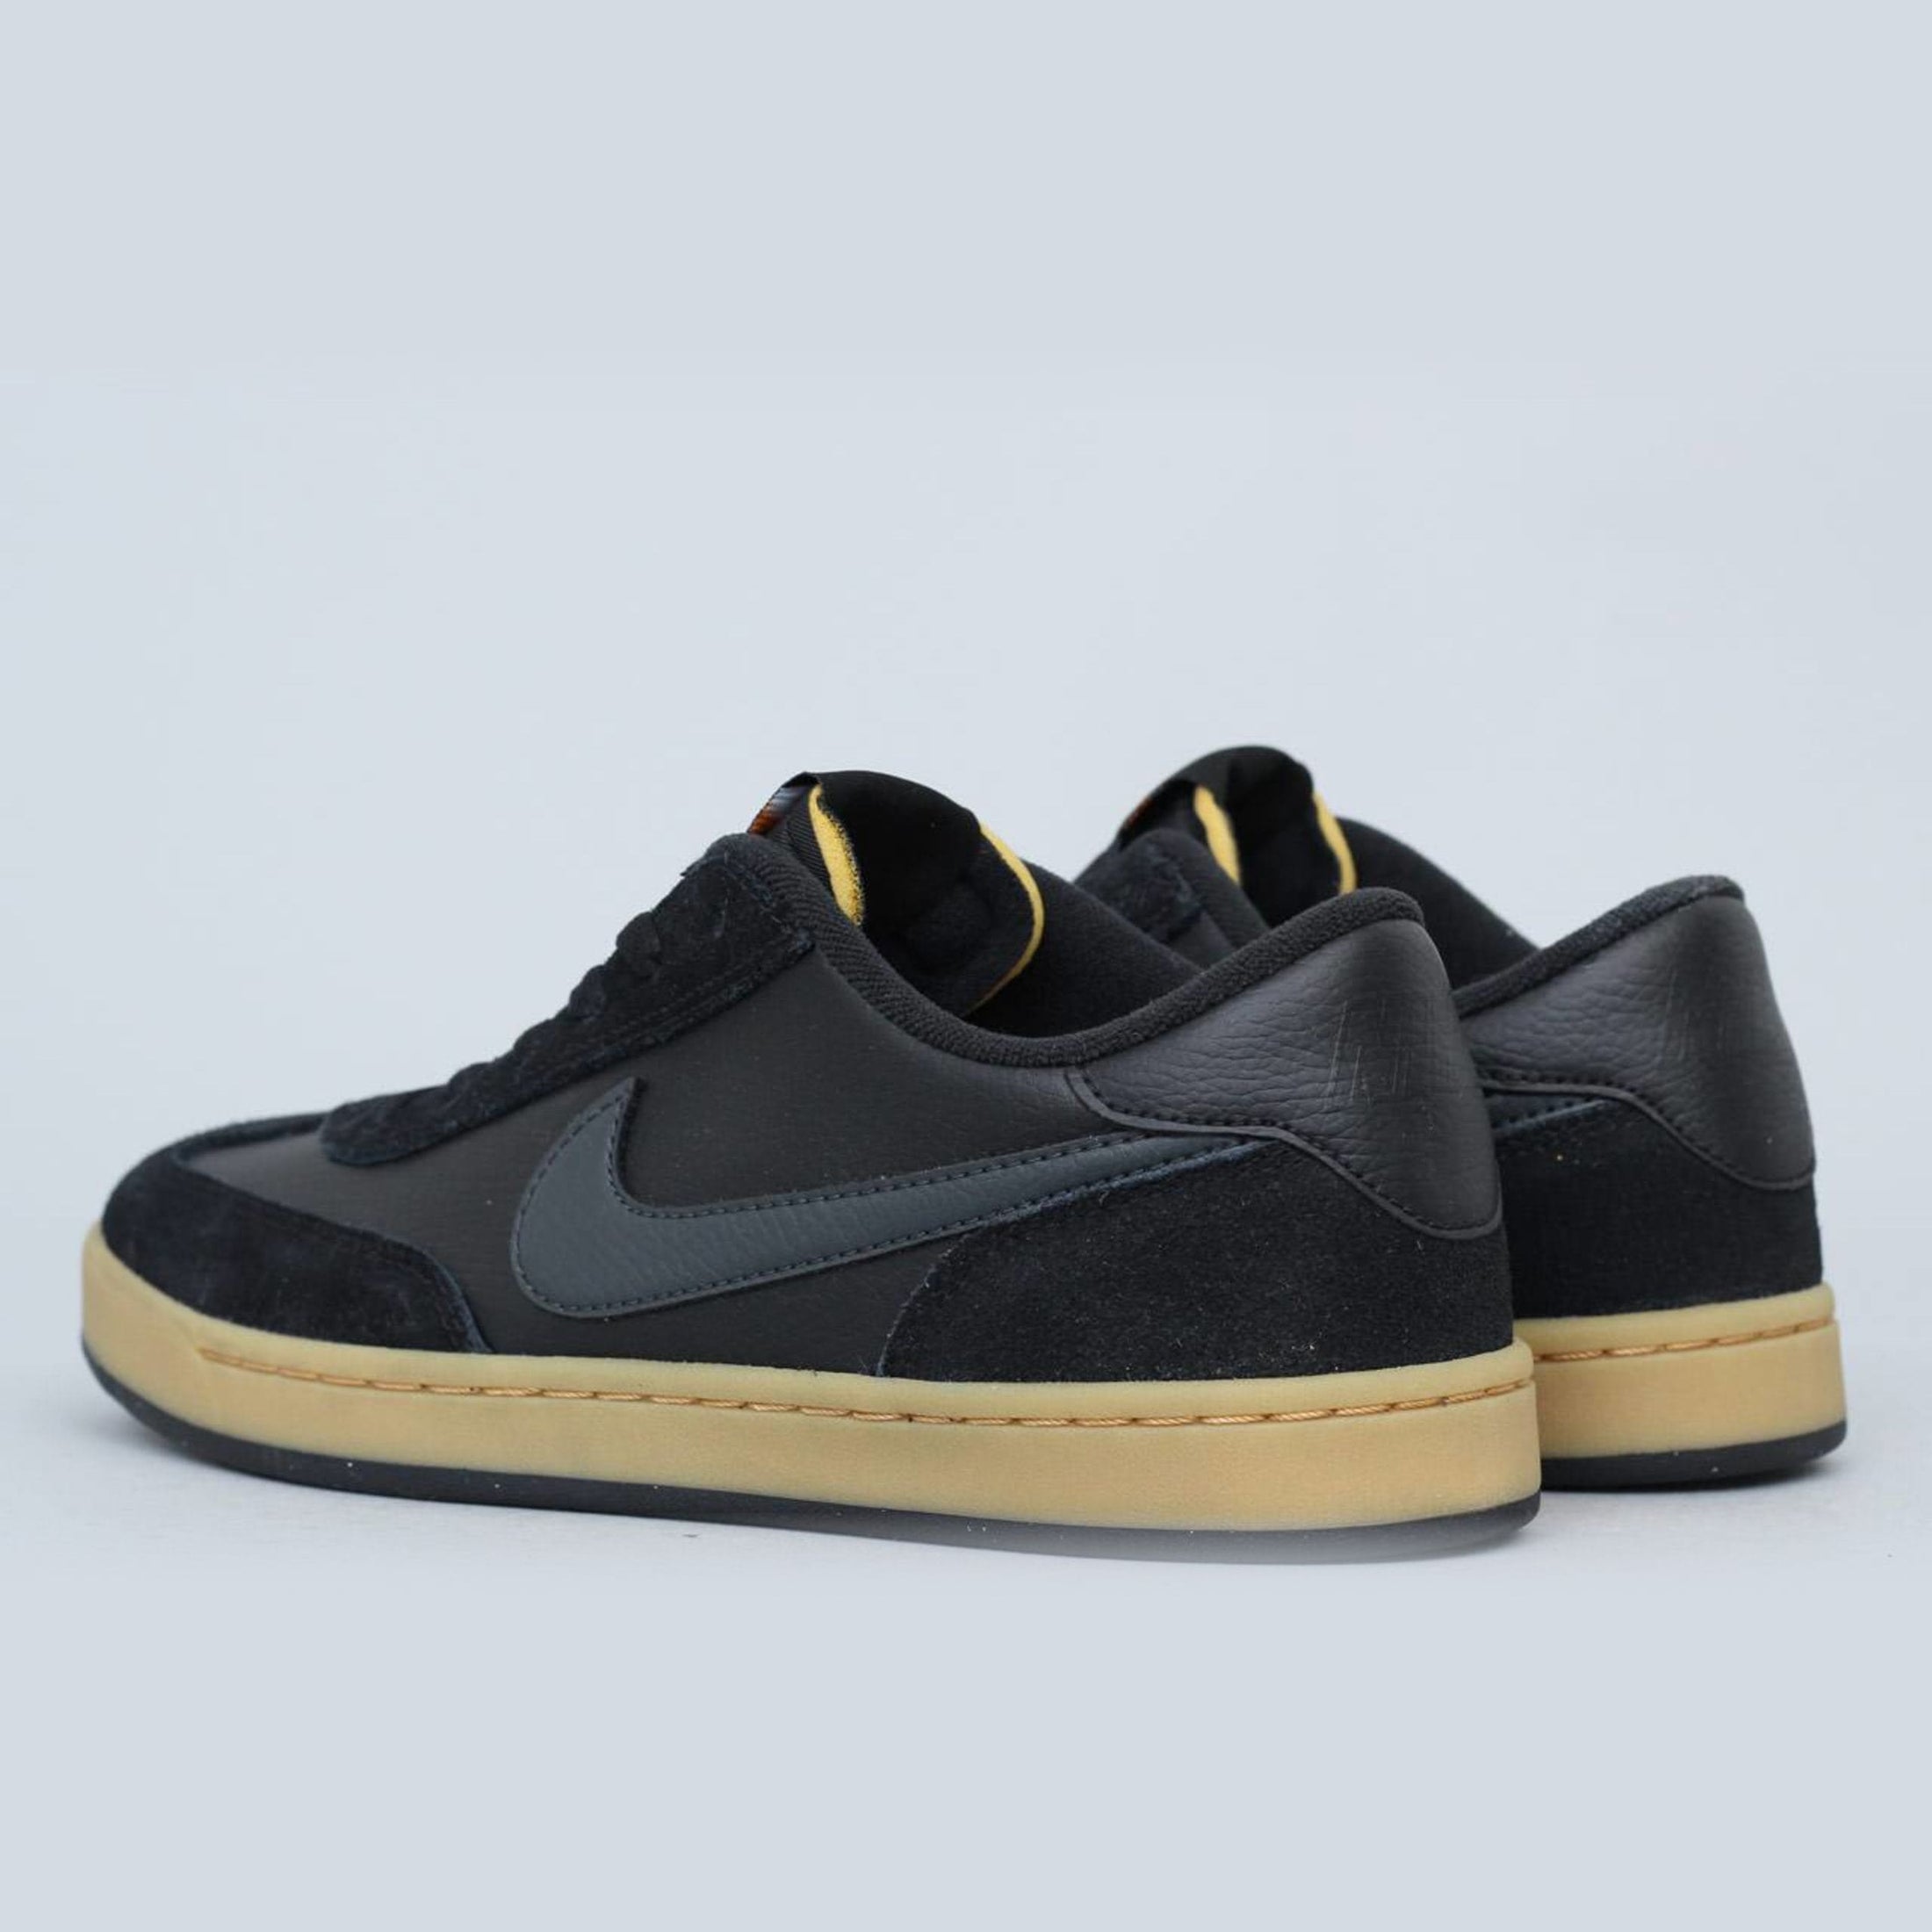 Nike SB FC Classic Shoes Black / Anthracite - Black